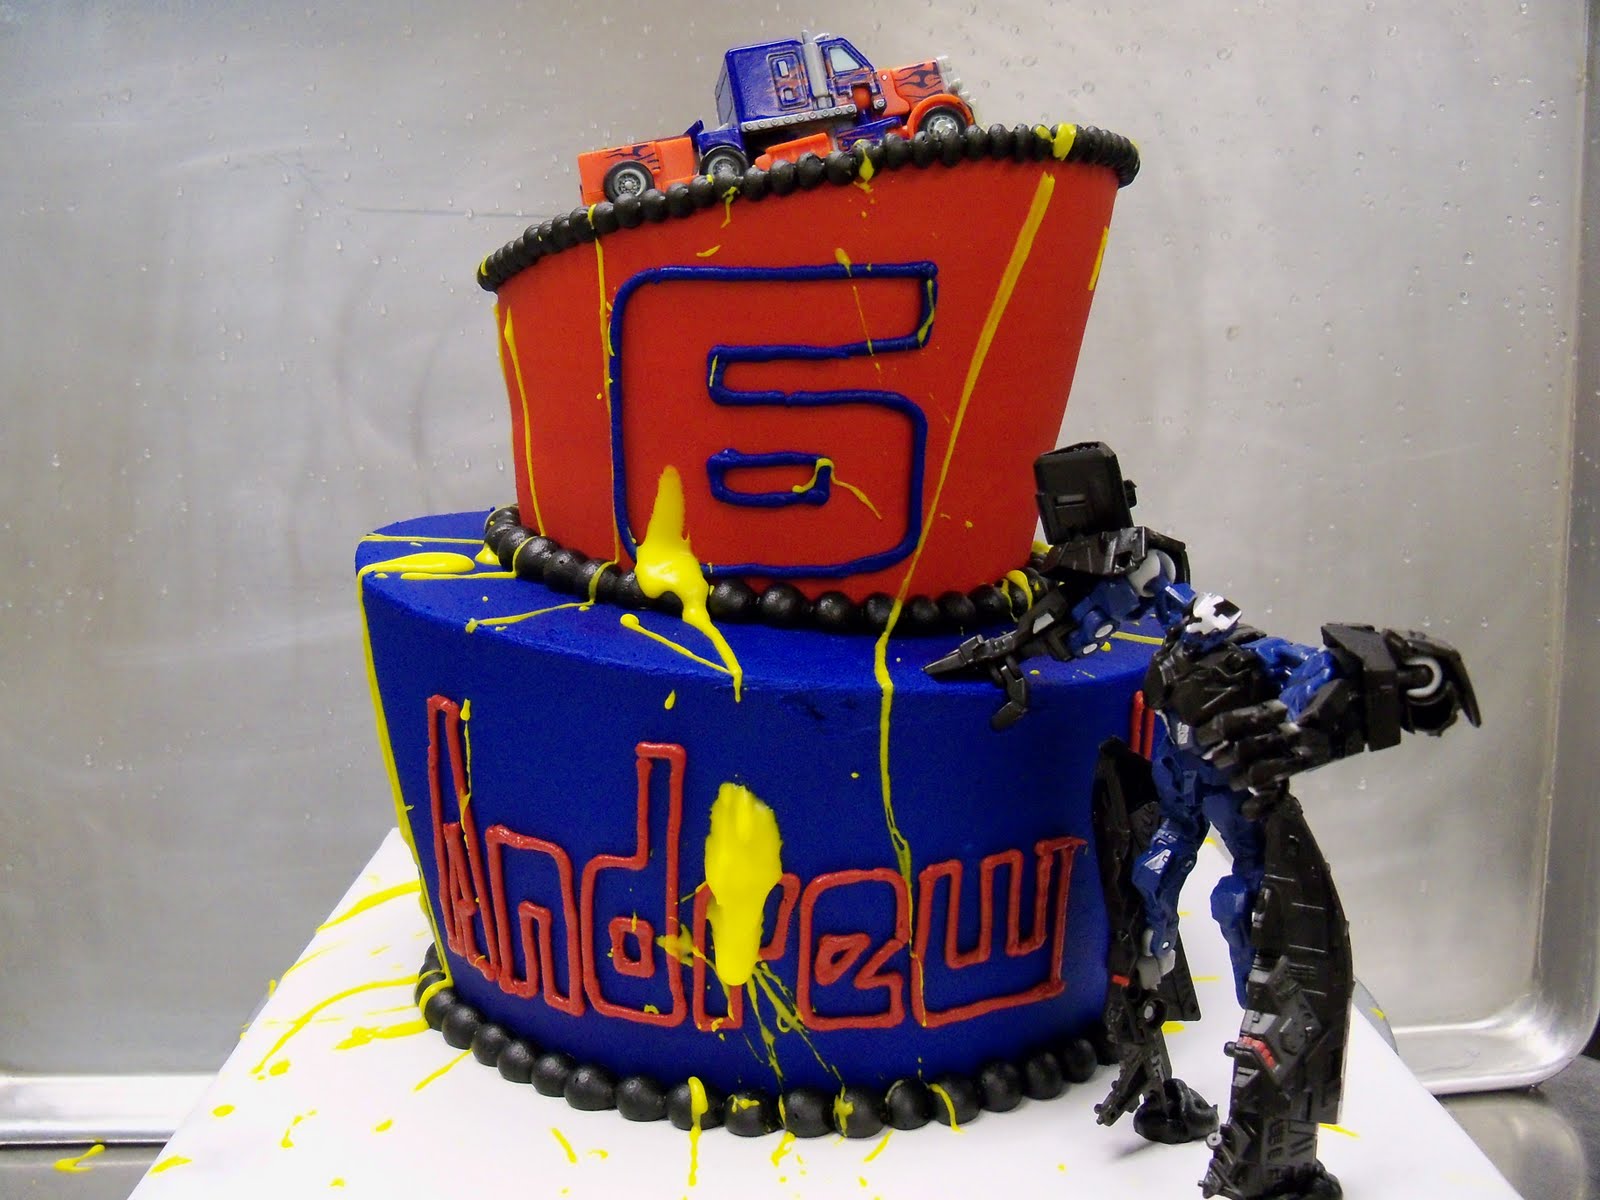 Transformer Cakes - Decoration Ideas | Little Birthday Cakes